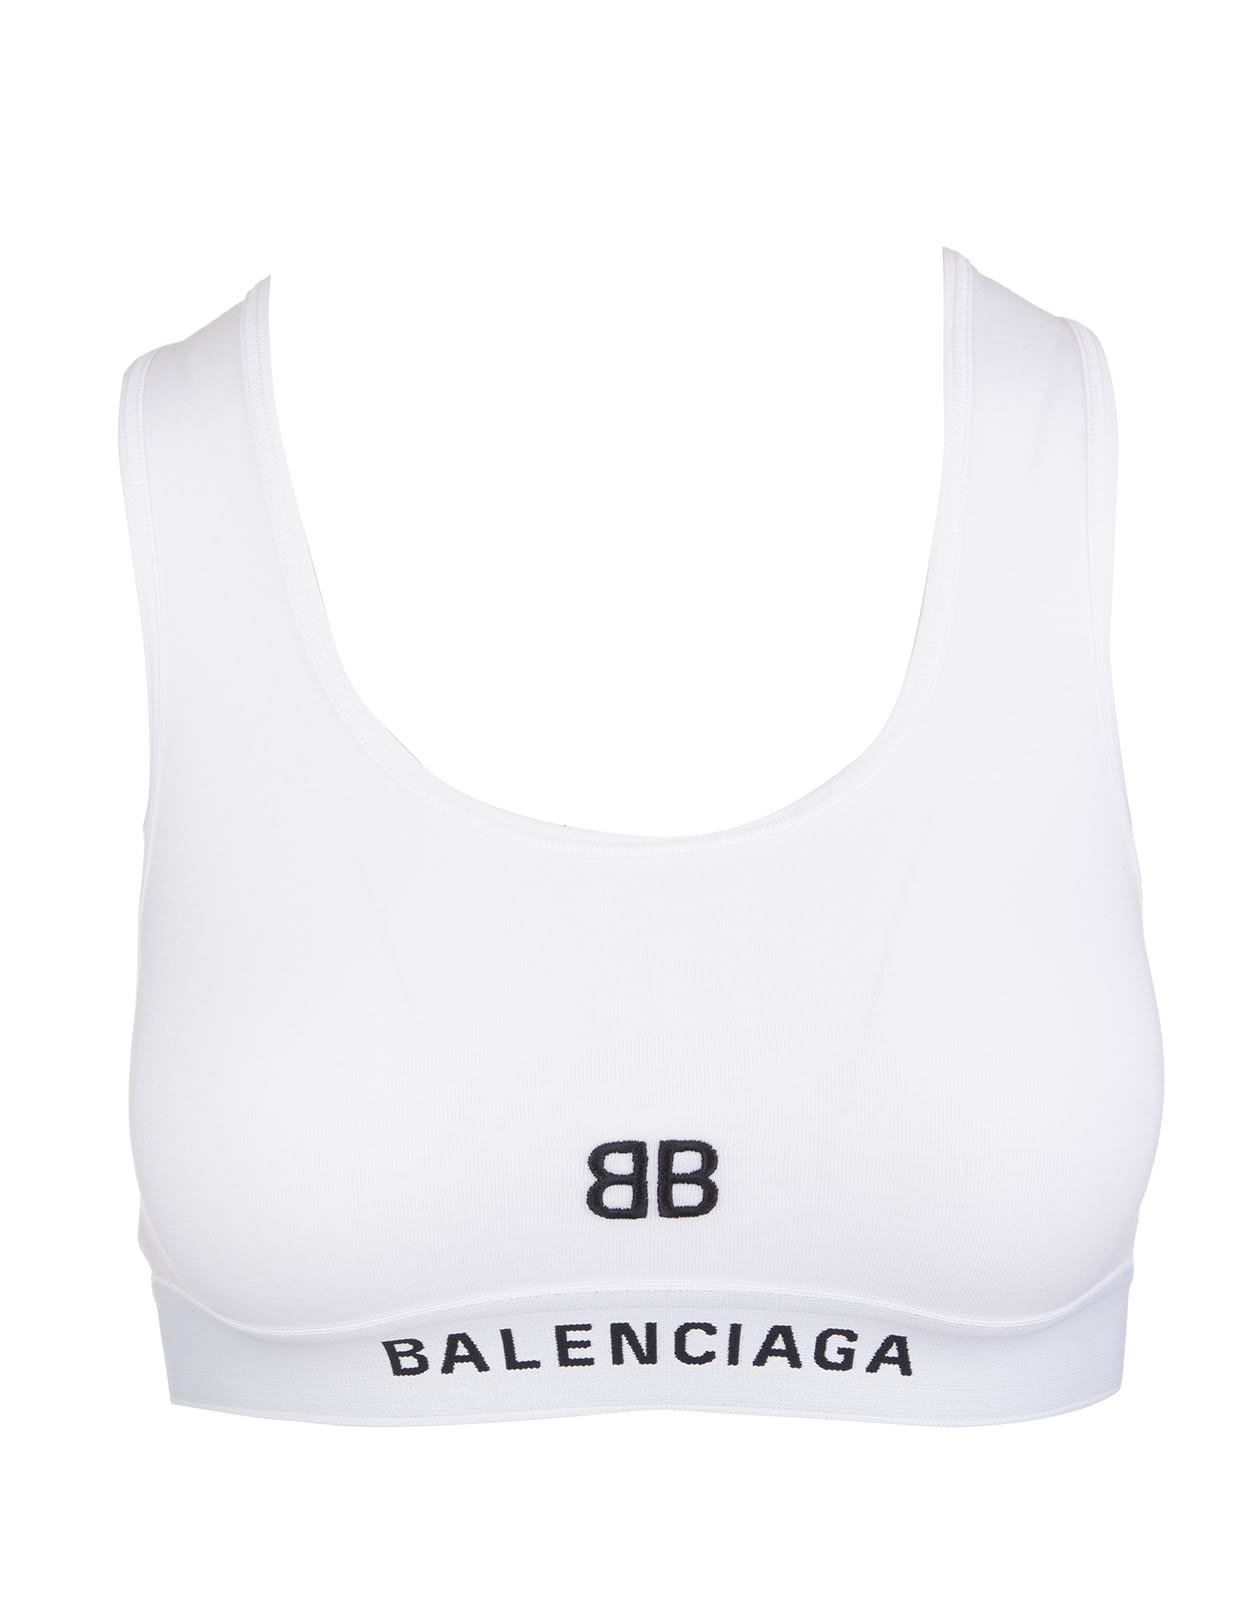 Balenciaga White Sports Bra With Black Bb Logo